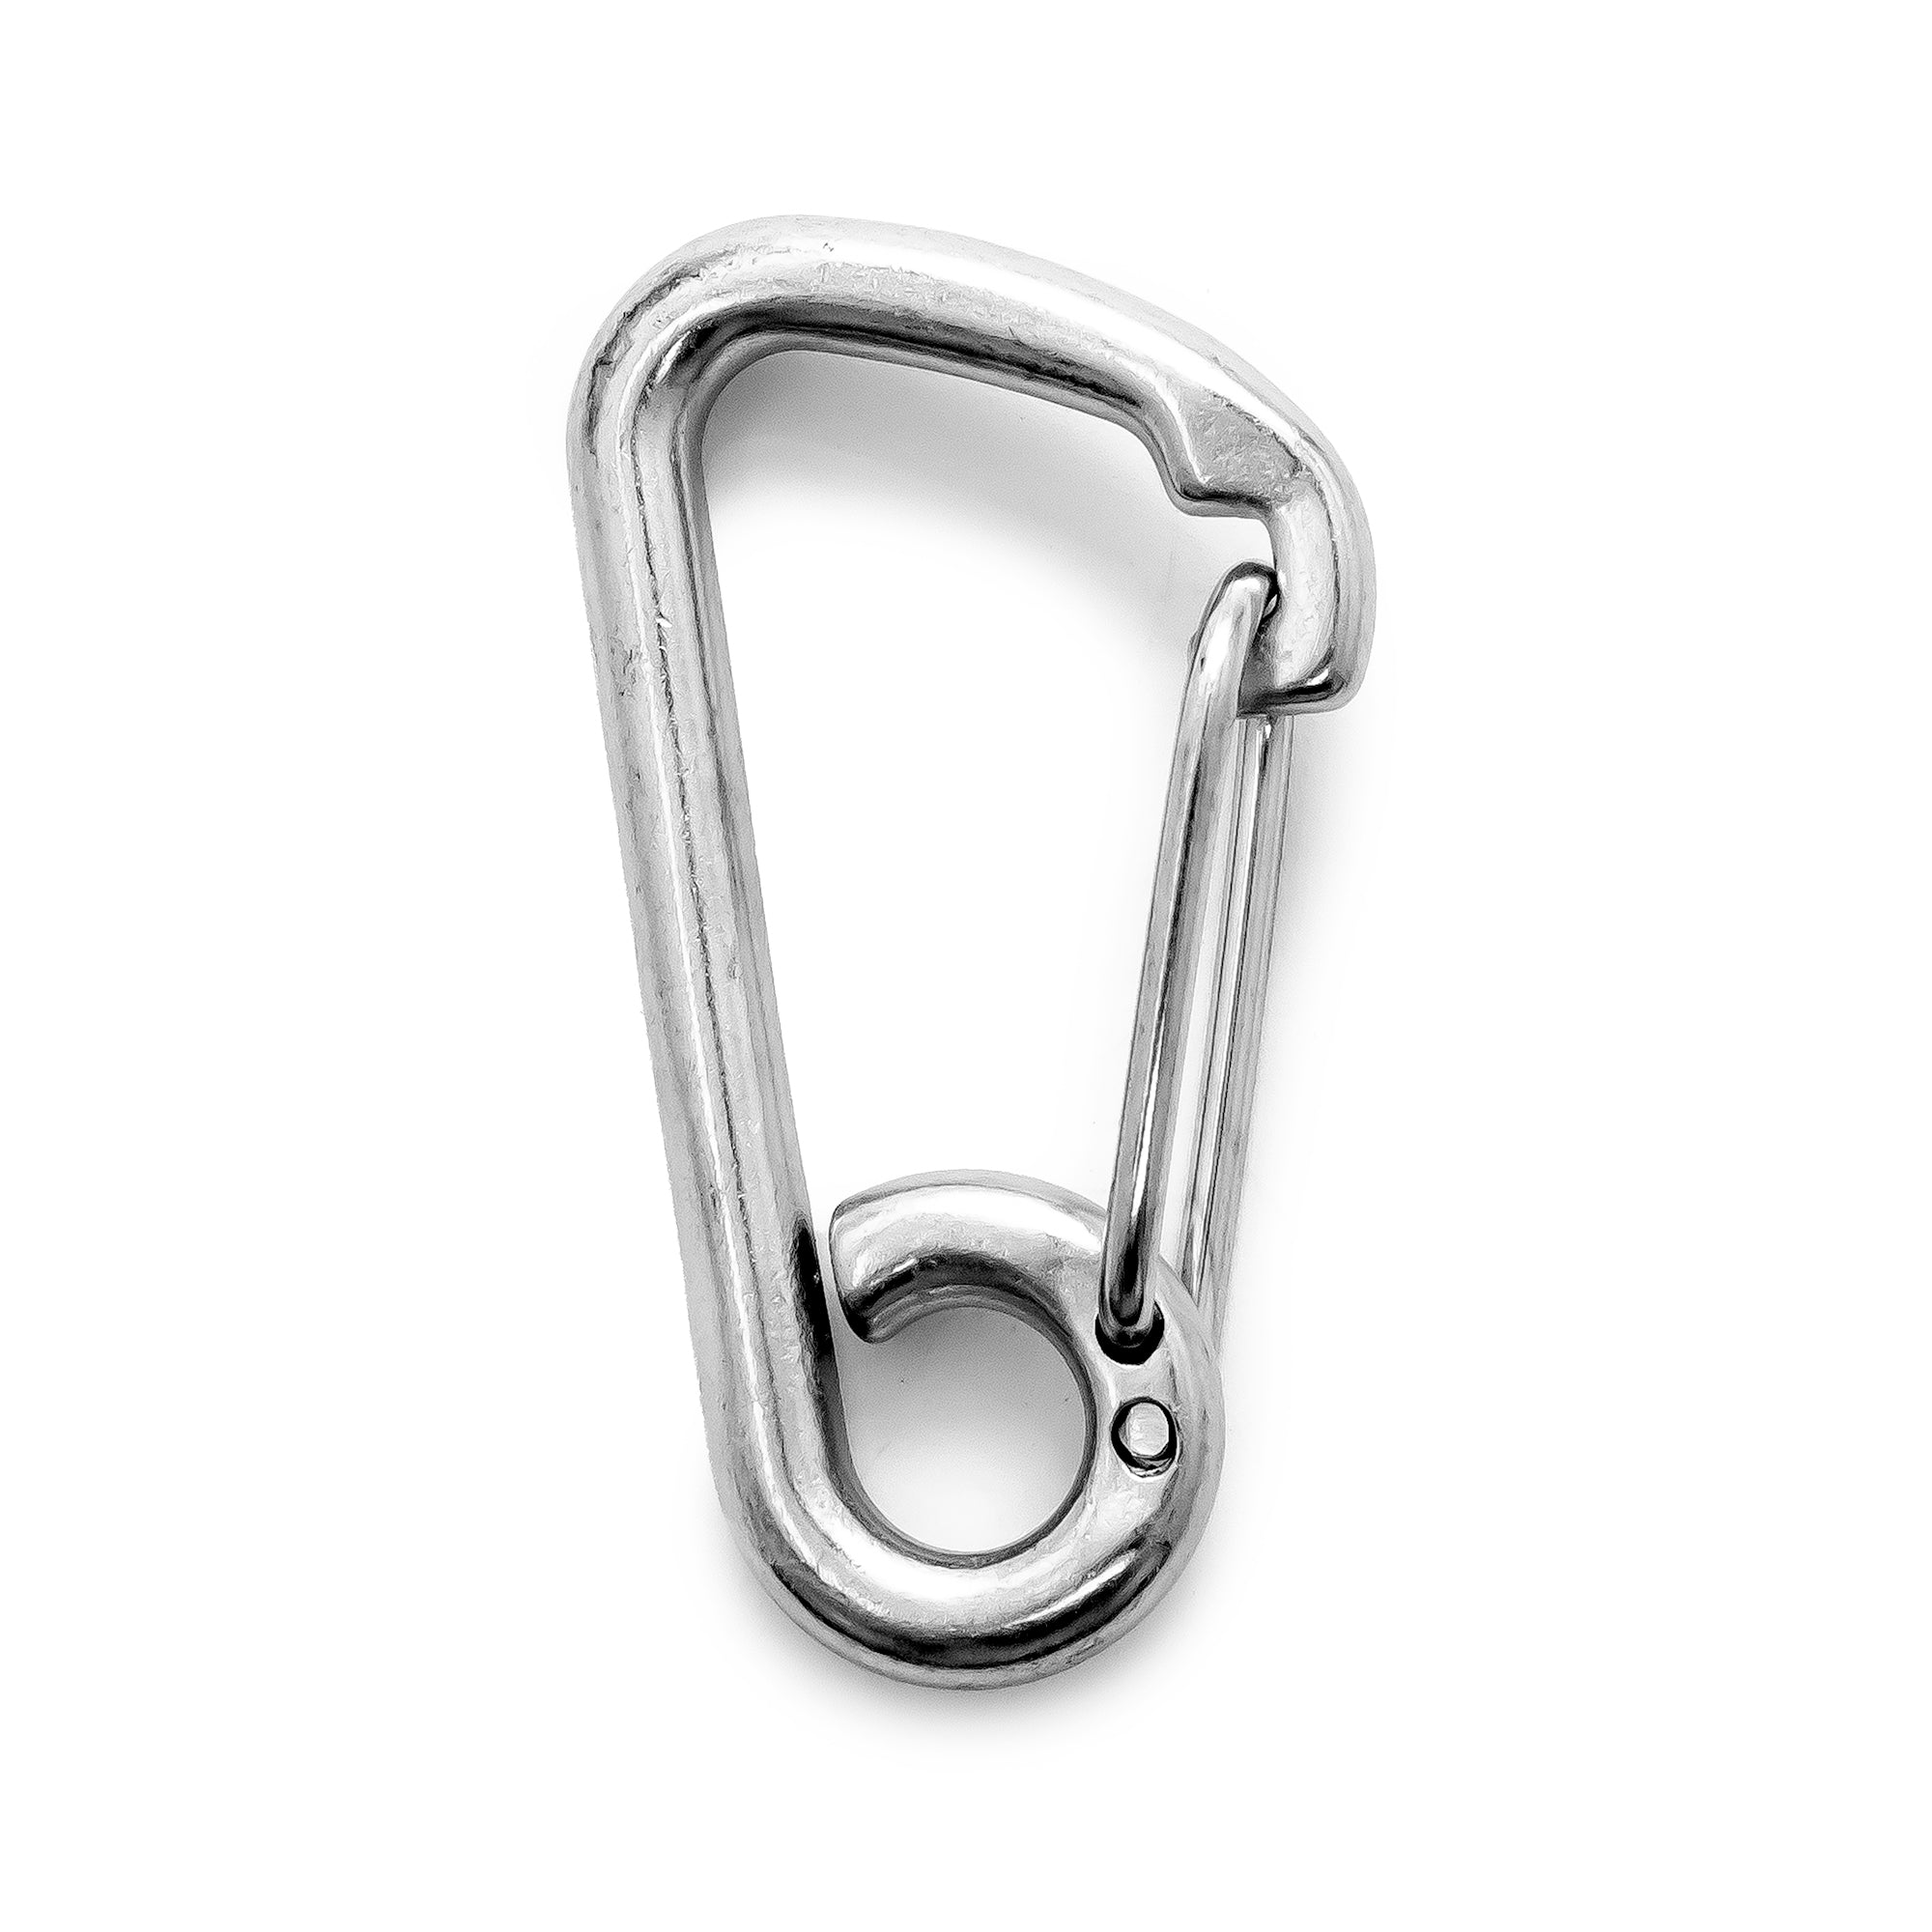 Asymmetric Snap Hook, Stainless Steel, 3-5/32" - FO465